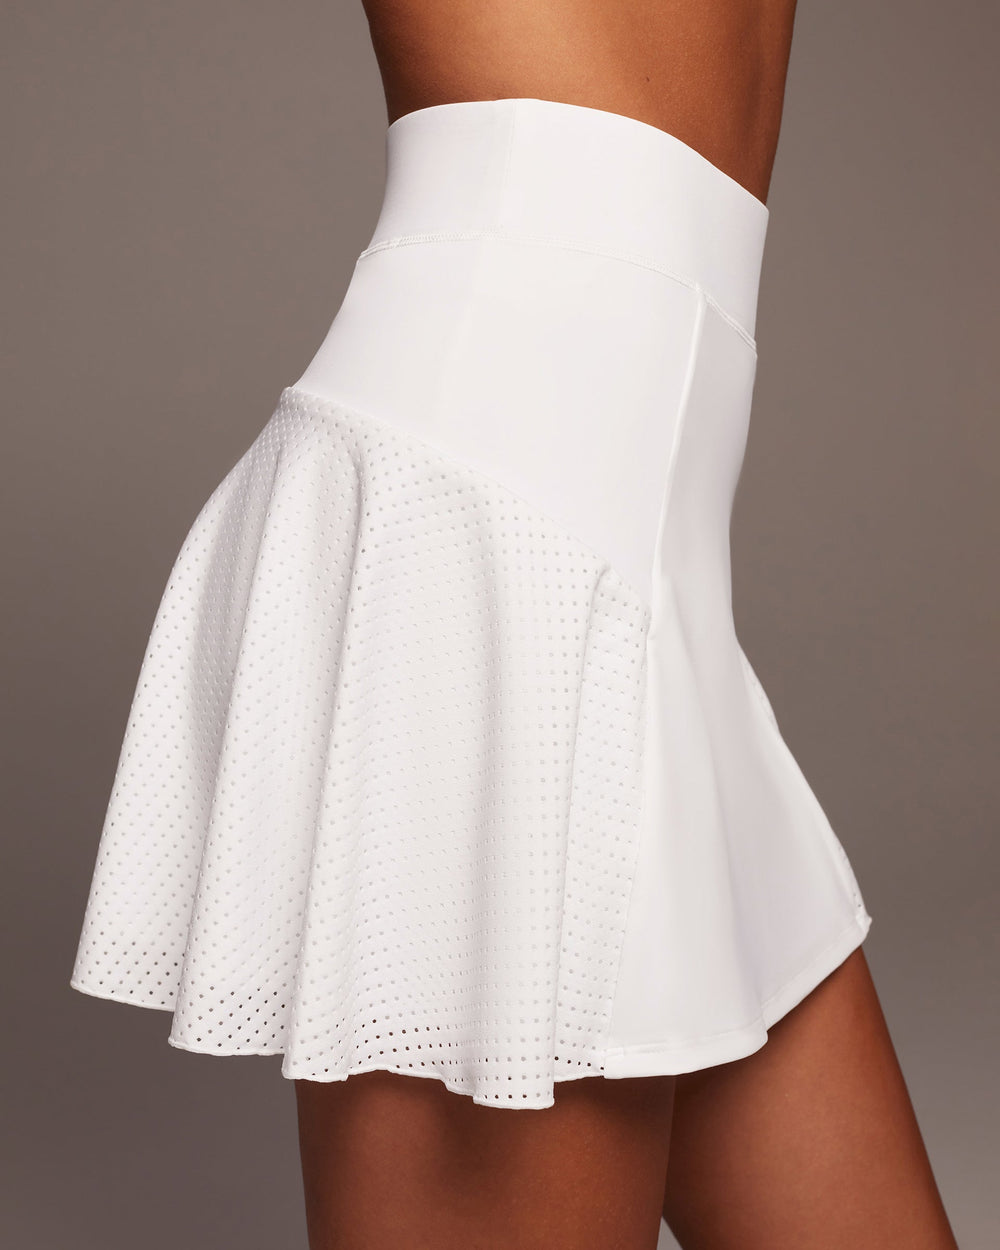 Electric Tennis Skirt w/ Shorts - White